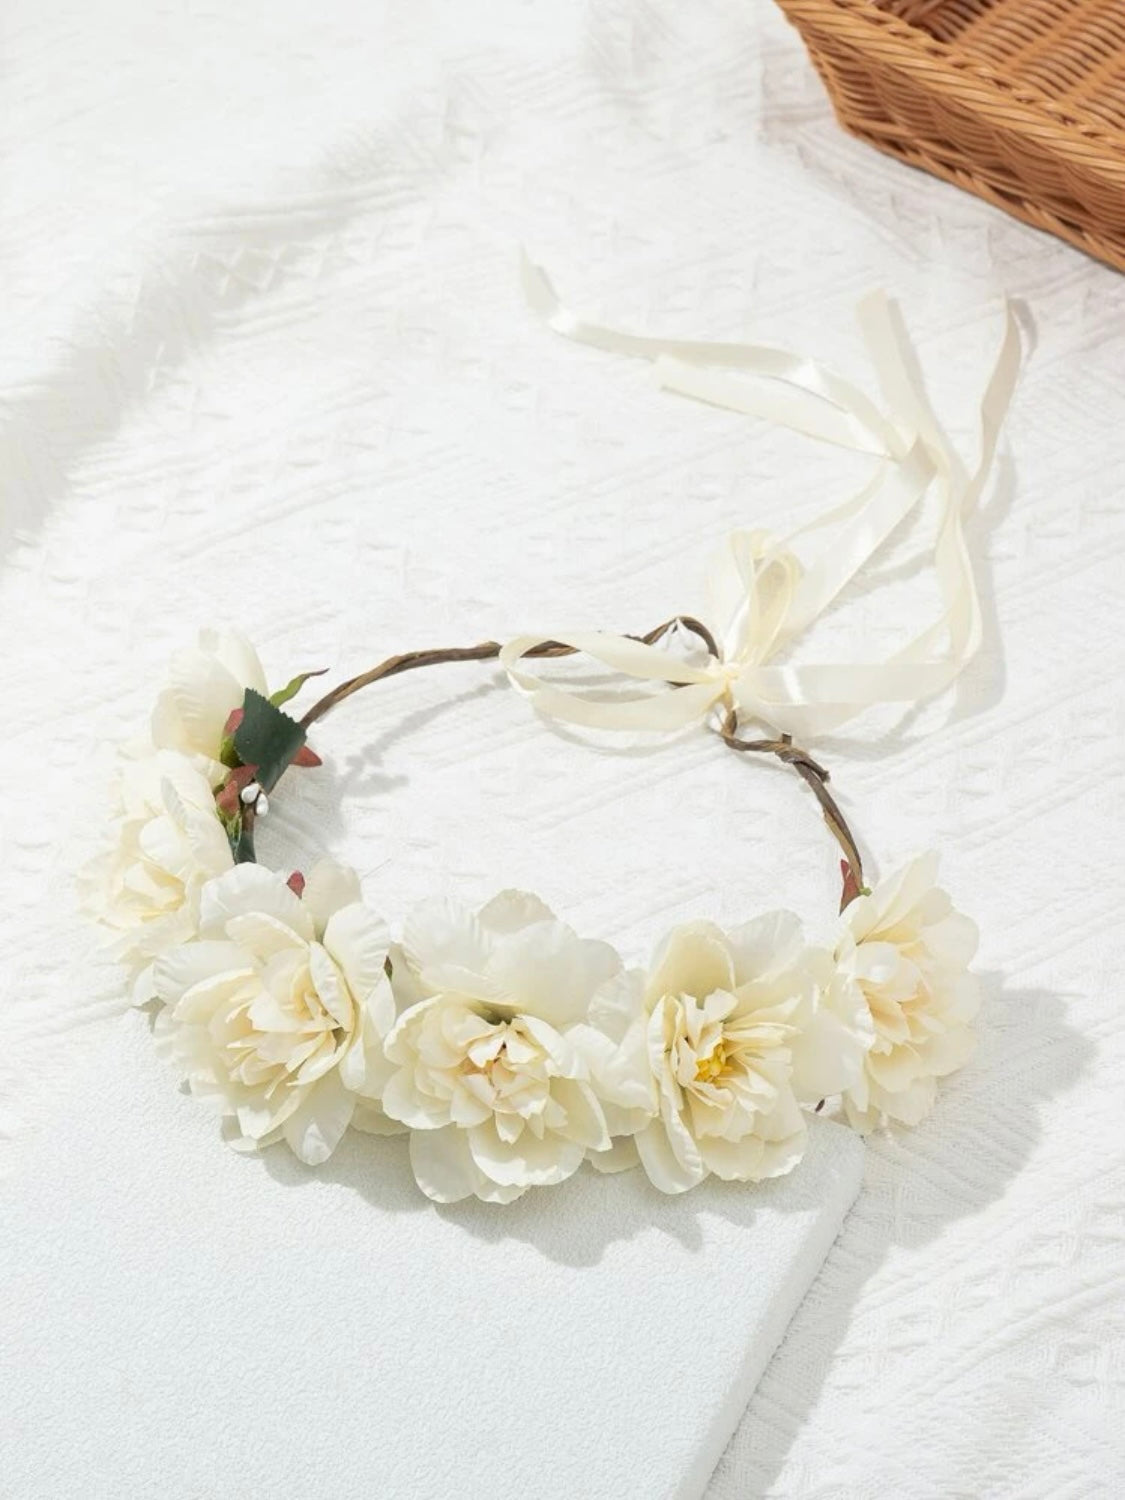 Hårband med blommor & blad, satinband